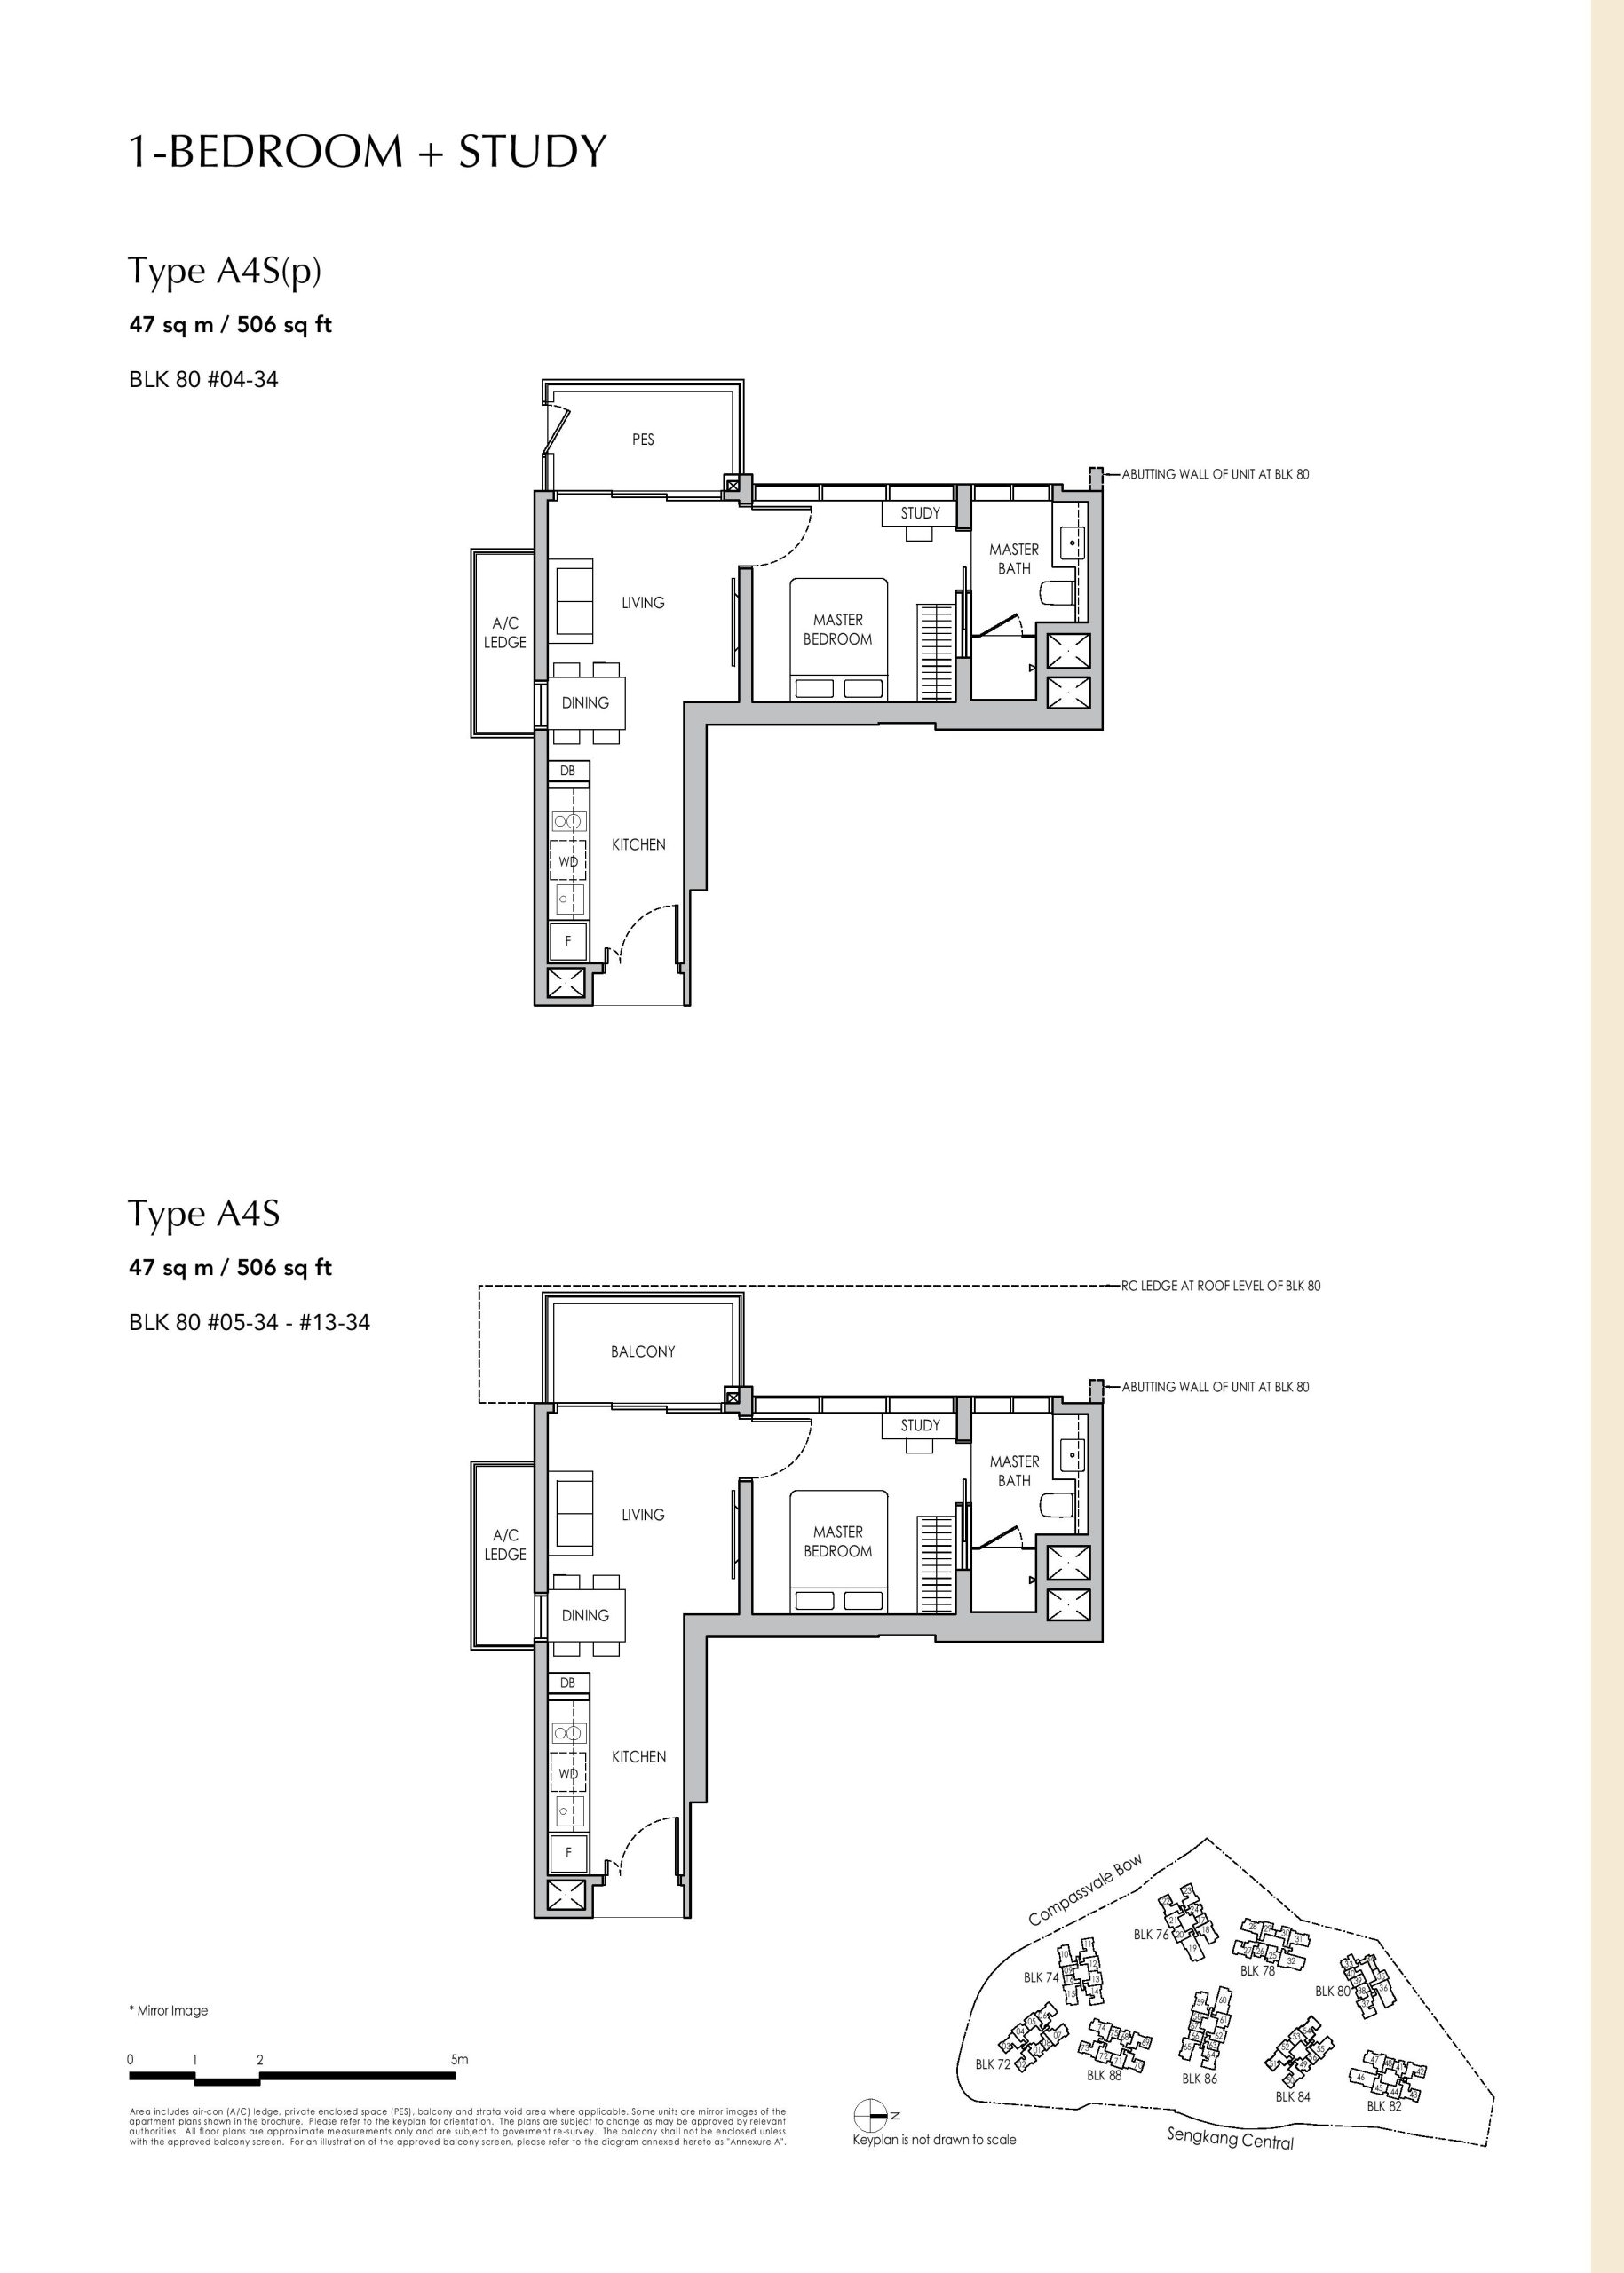 Sengkang Grand Residences 1 Bedroom + Study Type A4S(p), A4S Floor Plans